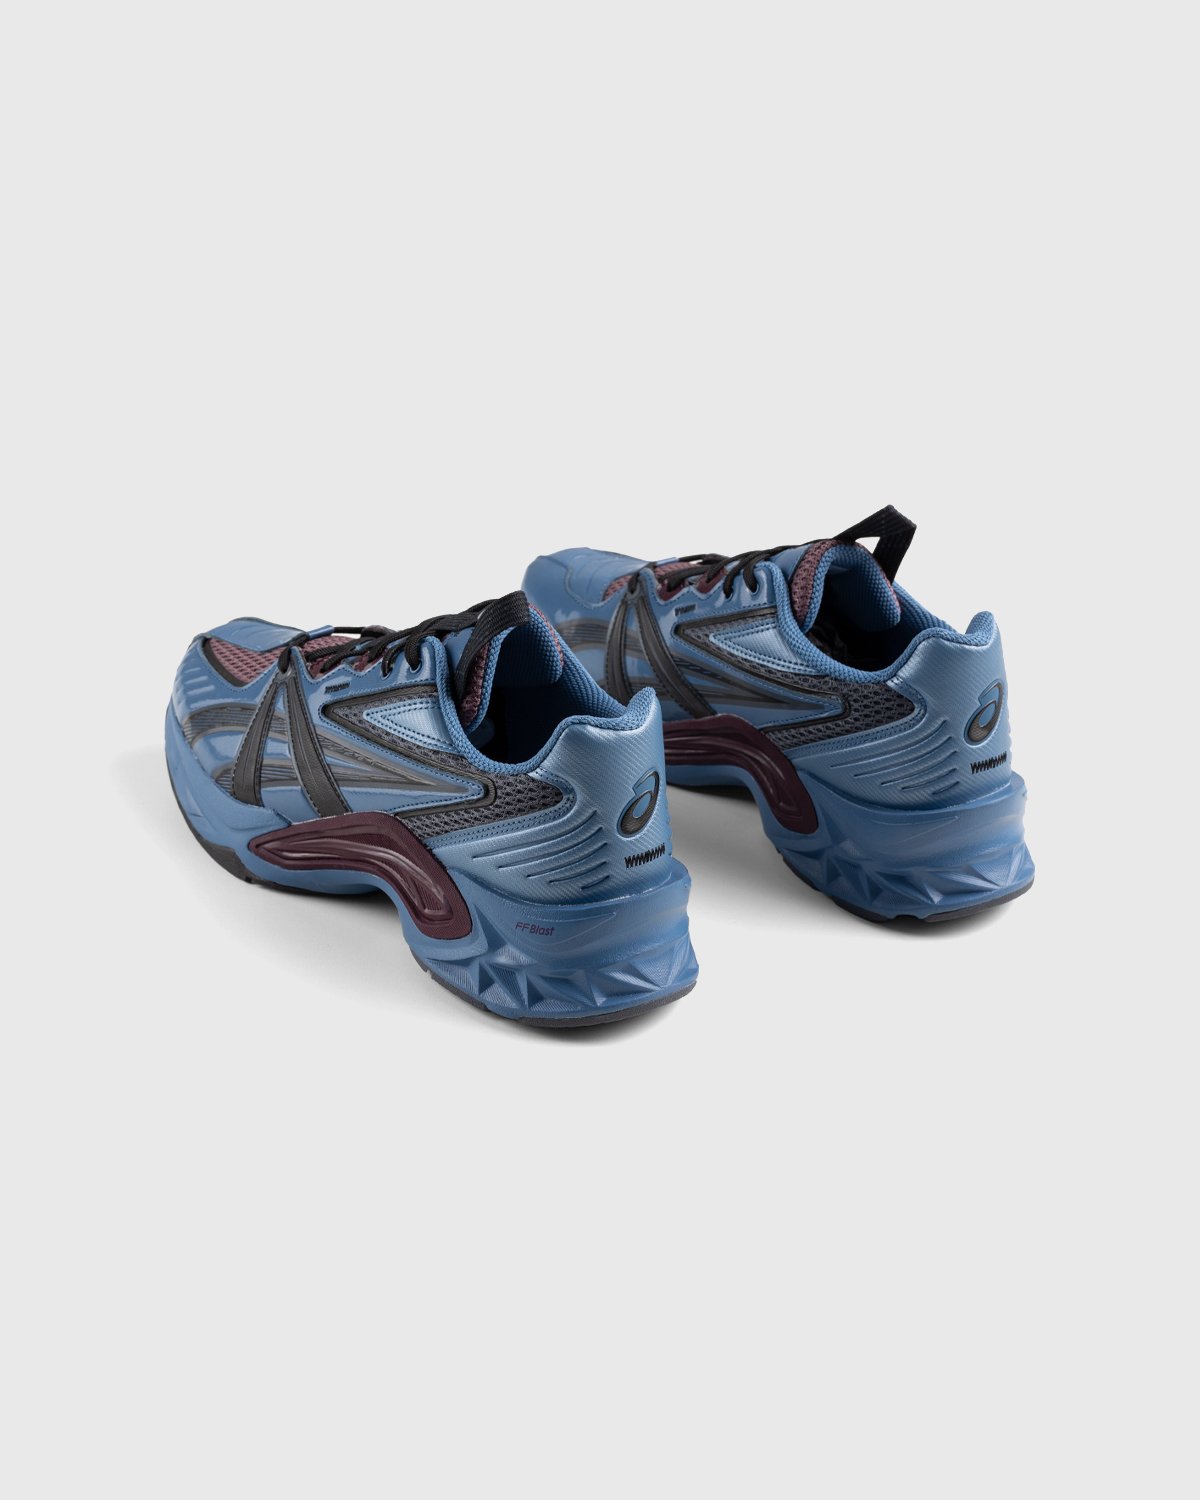 asics - HN2-S Protoblast Azure/Black - Footwear - Blue - Image 5